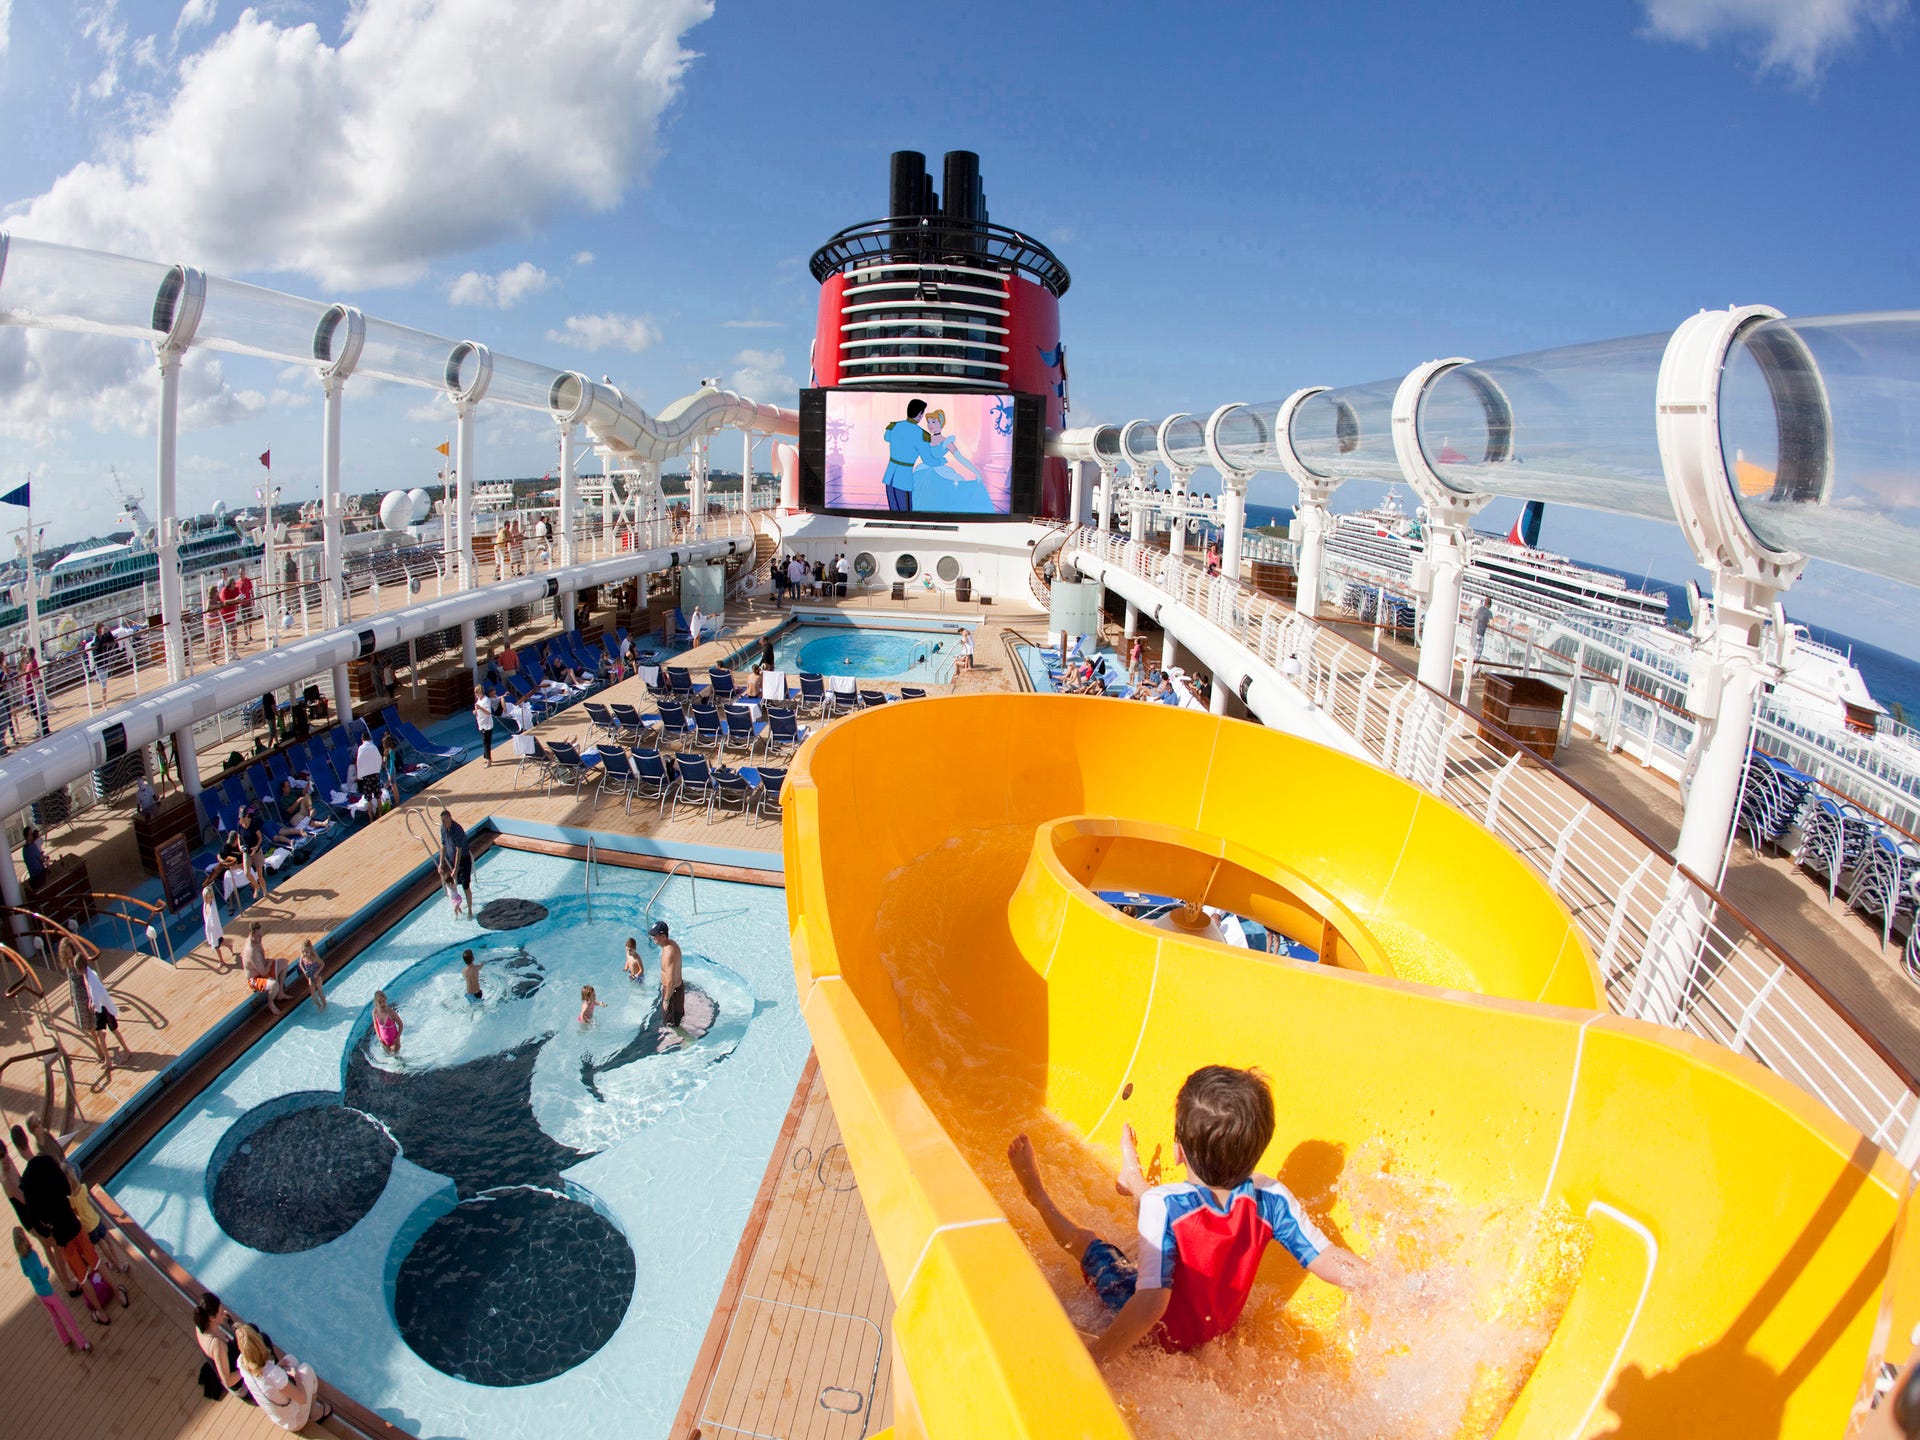 Disney Wish Disney Cruise Lines announces new ship, private island